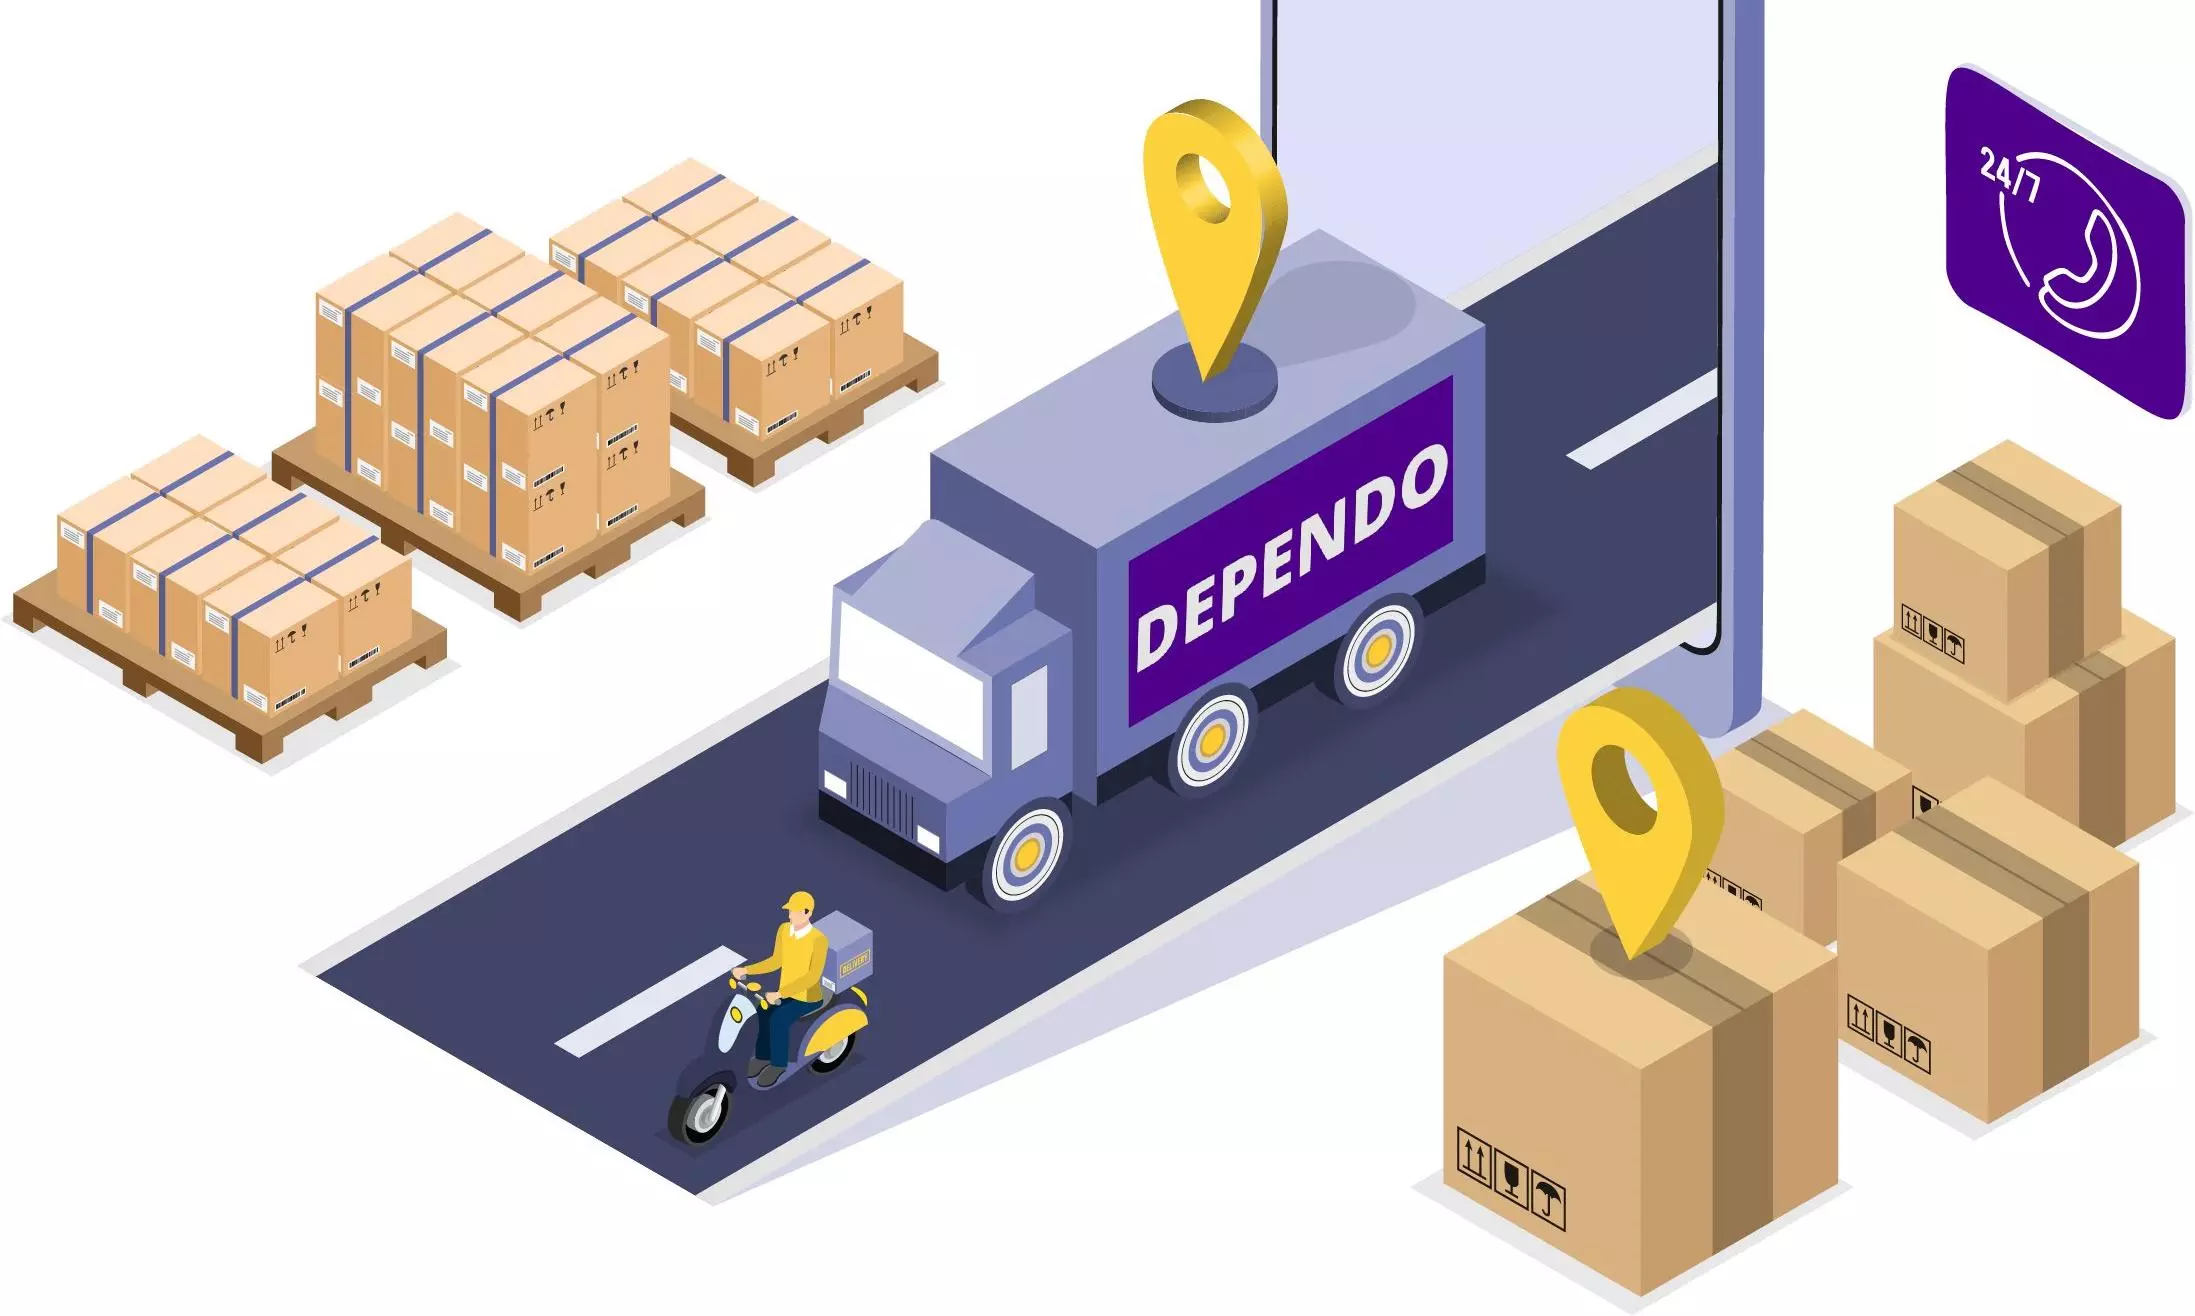 Shiprocket partners with Dependo for inter-city logistics